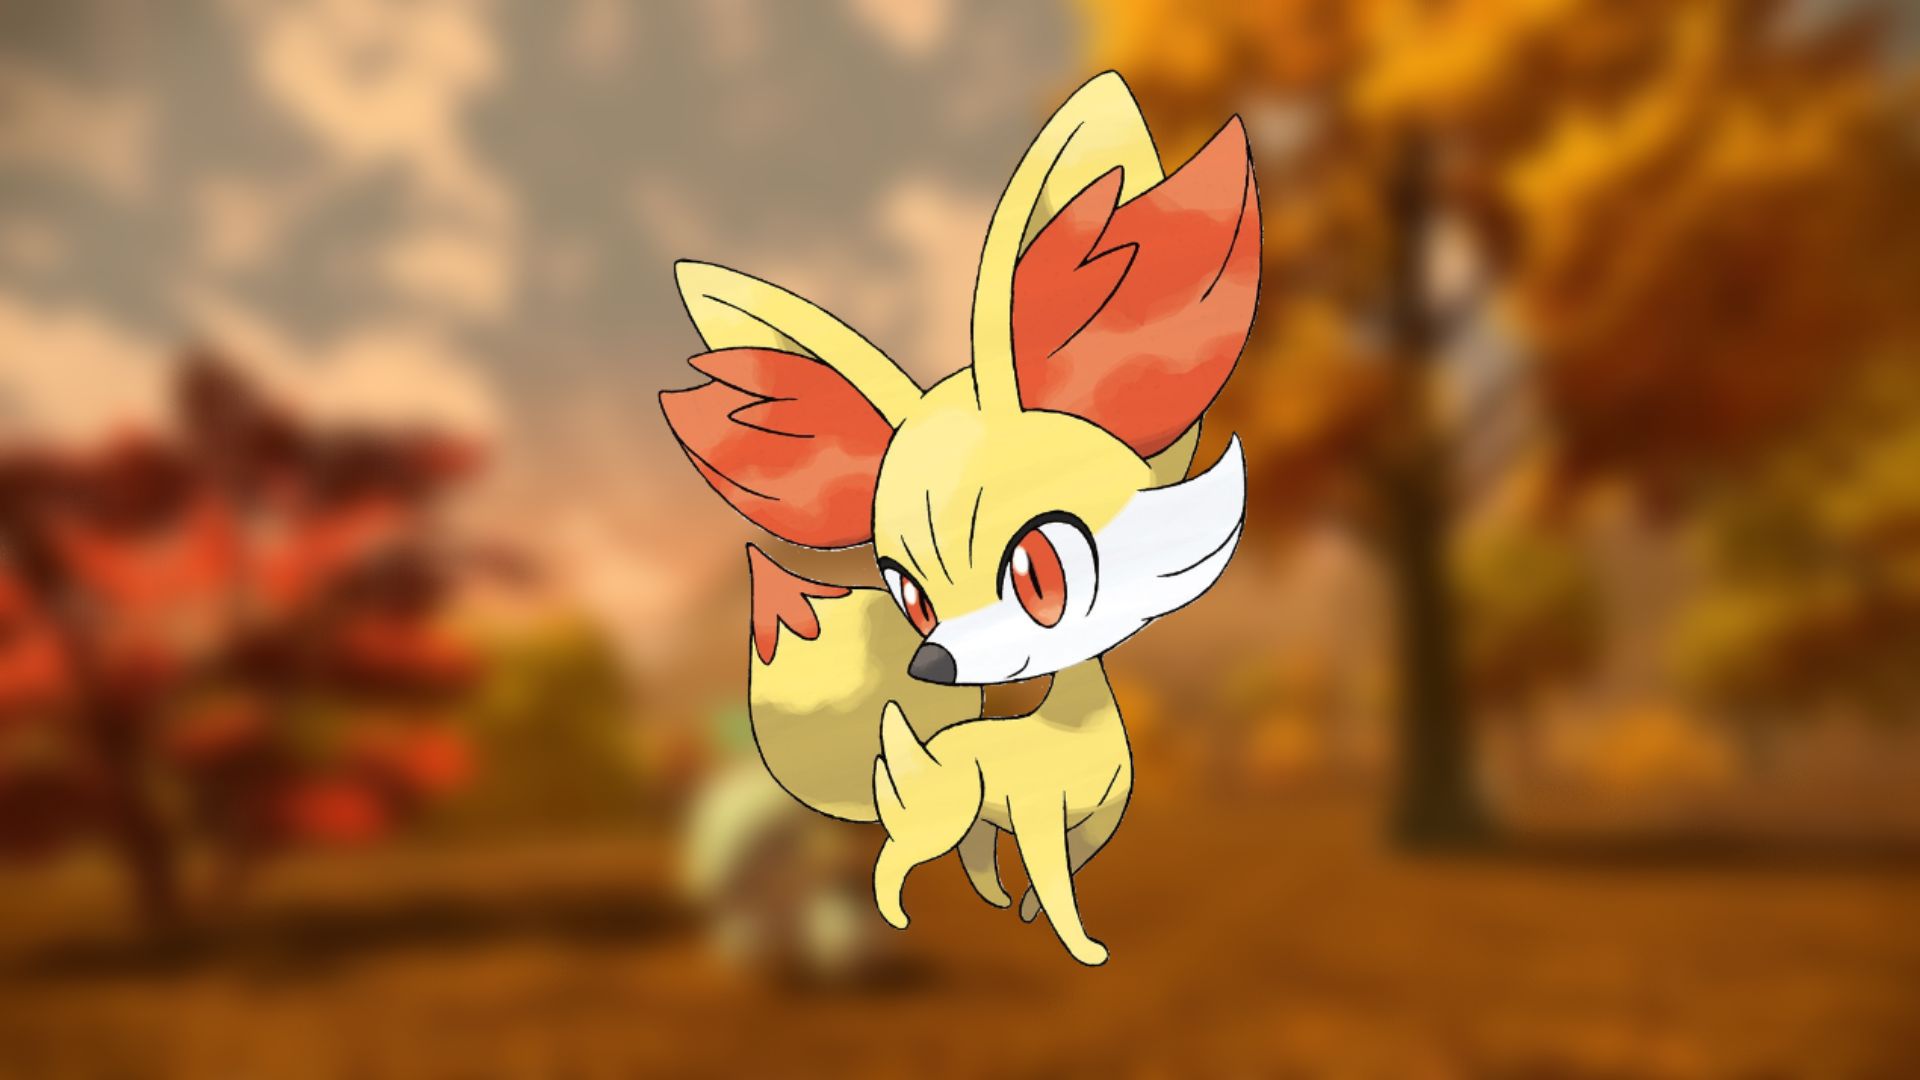 Cutest Pokémon - Fennekin. Its official artwork is over blurred scenery from Pokémon Legends: Arceus.